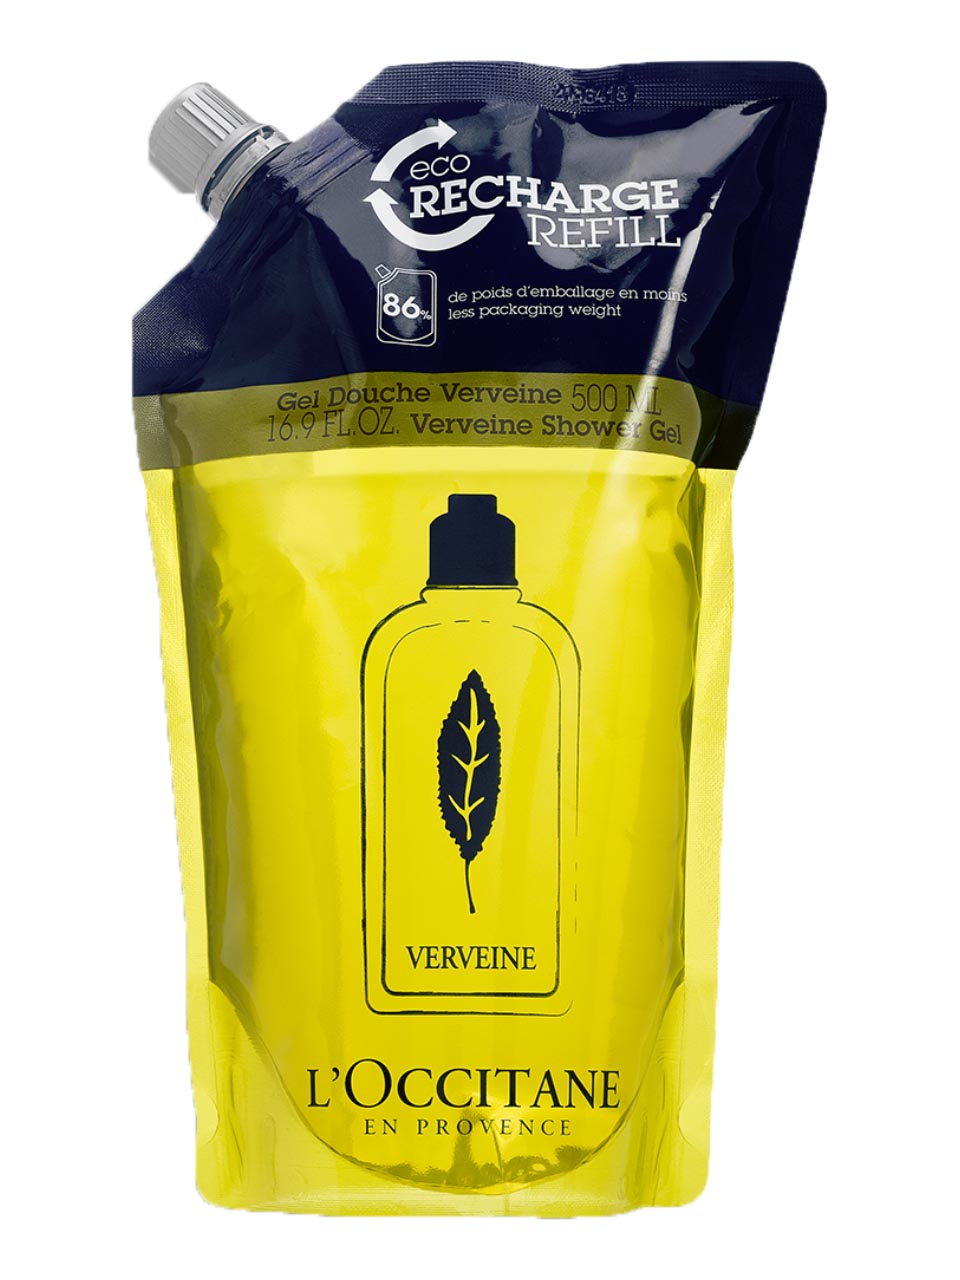 L'Occitane en Provence Verbena Verveine Shower Gel Refill 500 ml null - onesize - 1